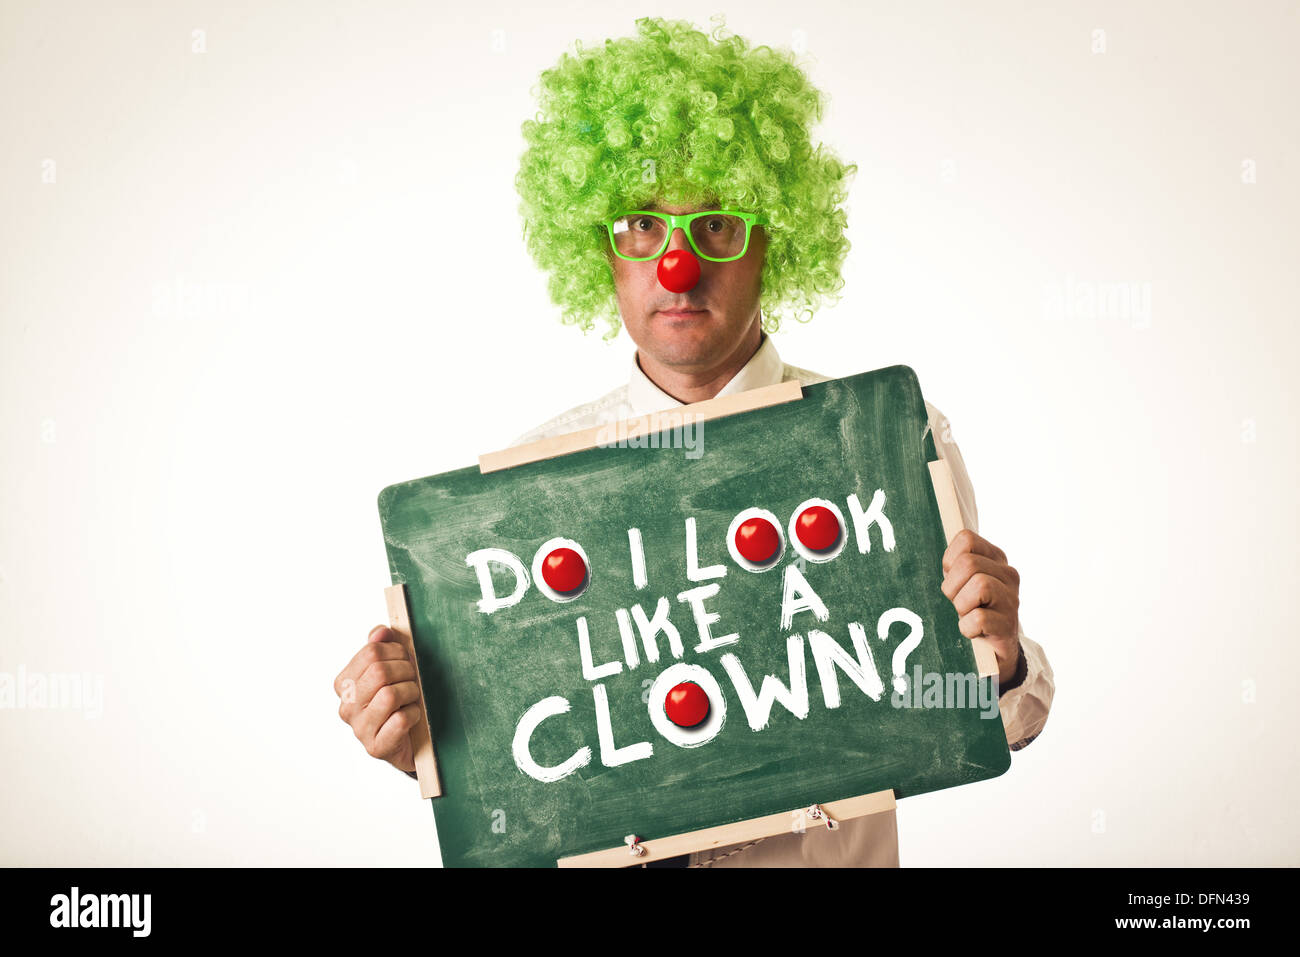 Clown holding chalkboard su sfondo bianco. Foto Stock